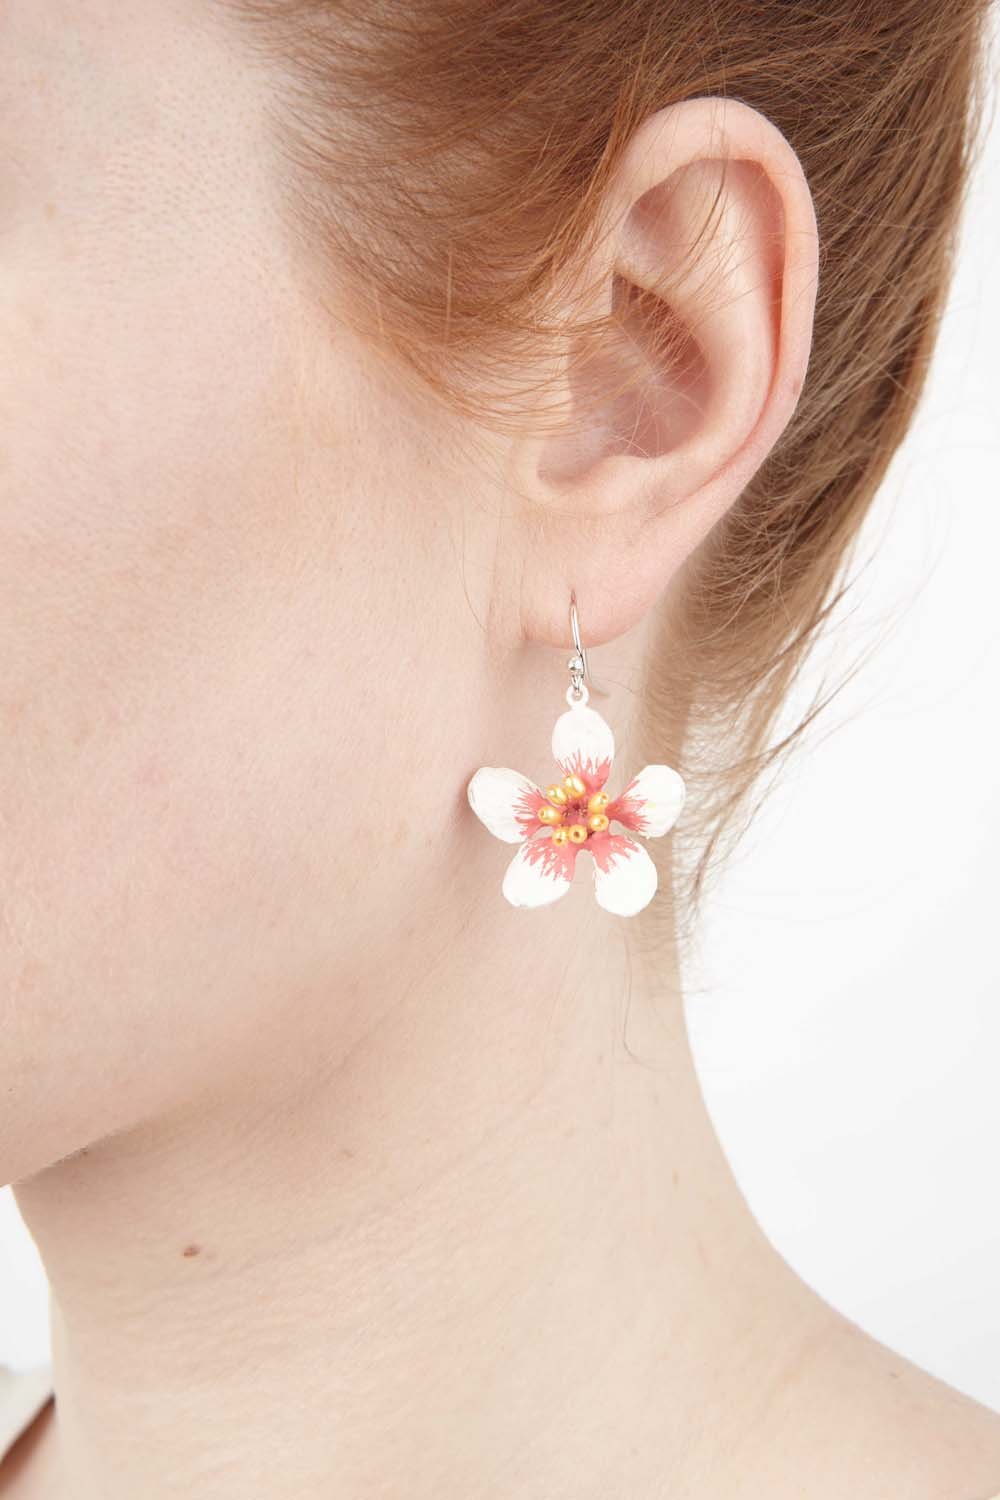 Almond Blossom Earrings - Wire